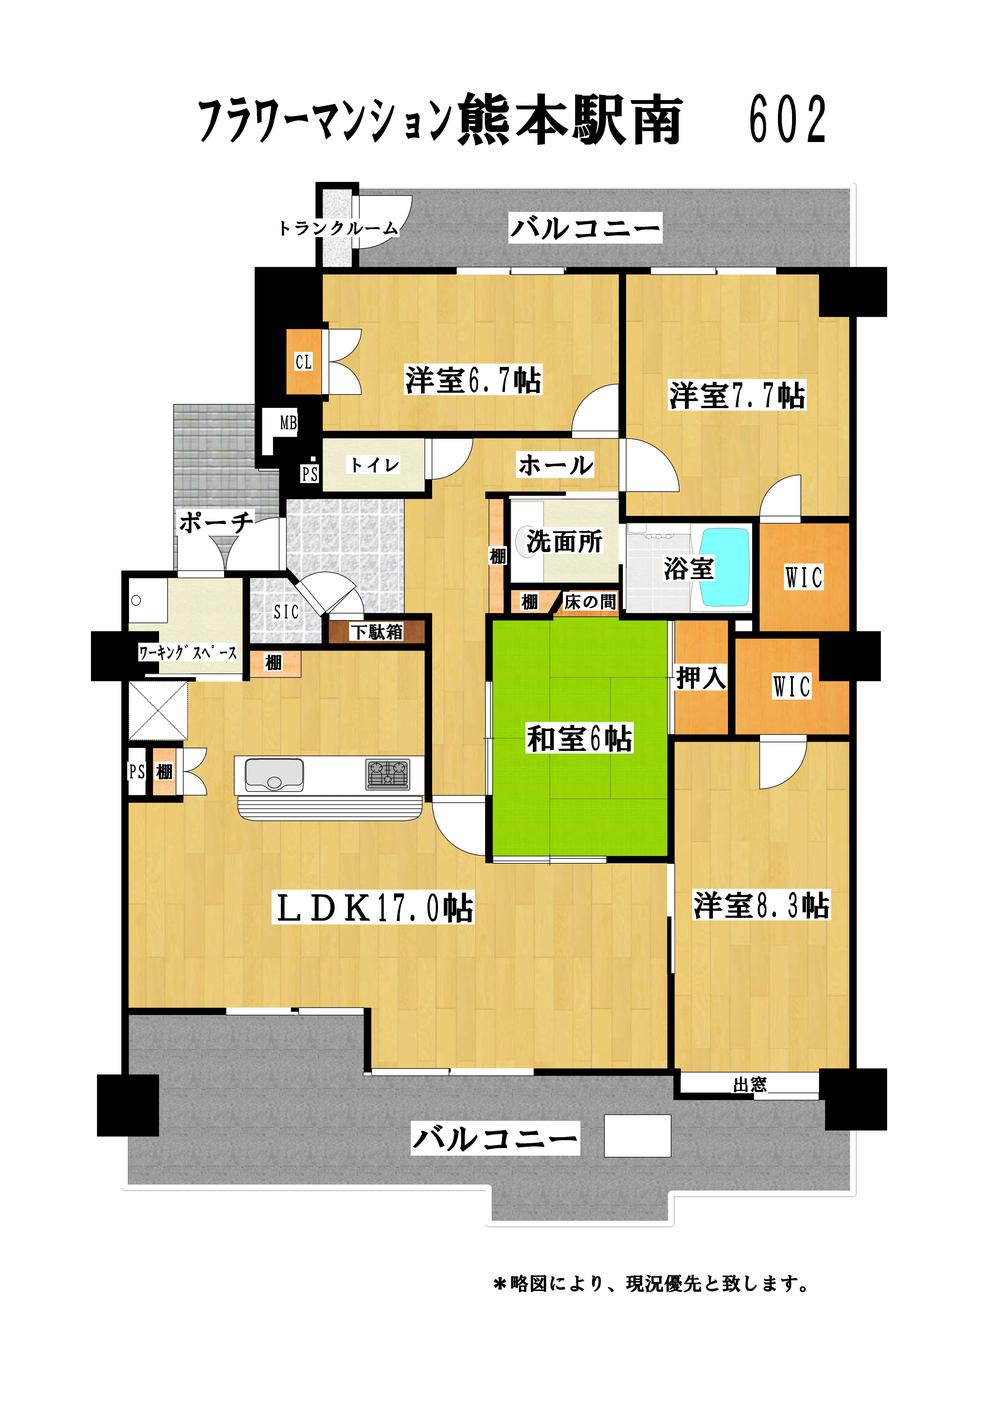 Floor plan. 4LDK, Price 25,800,000 yen, The area occupied 115.8 sq m , Balcony area 31.9 sq m